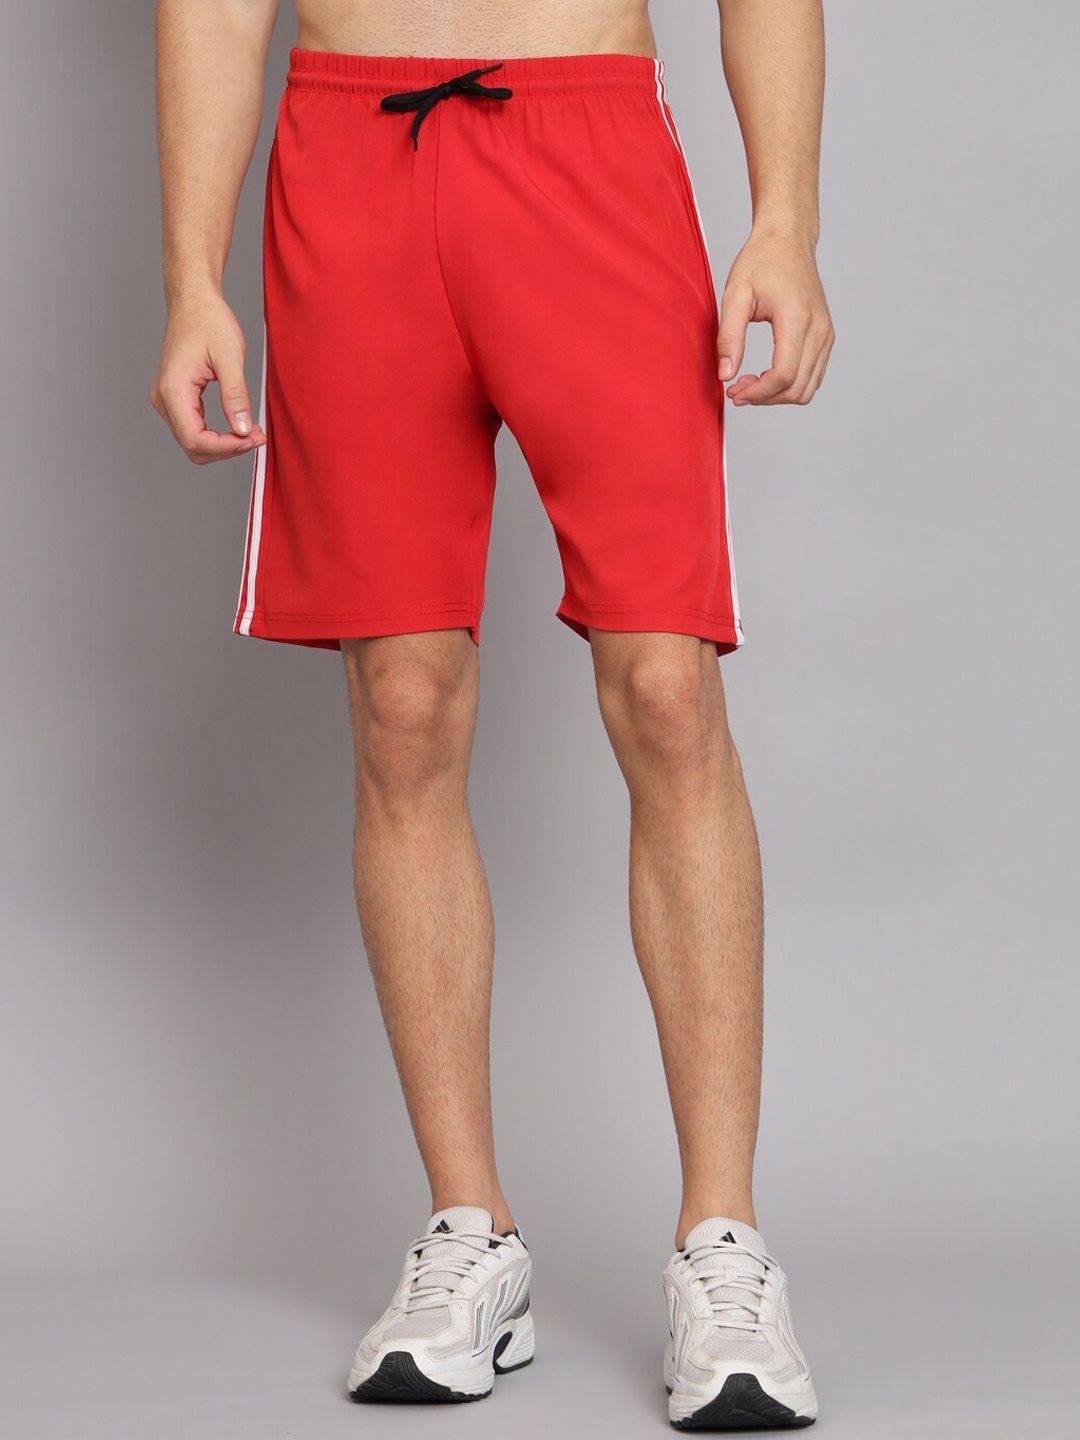 glito-men-red-training-or-gym-sports-shorts